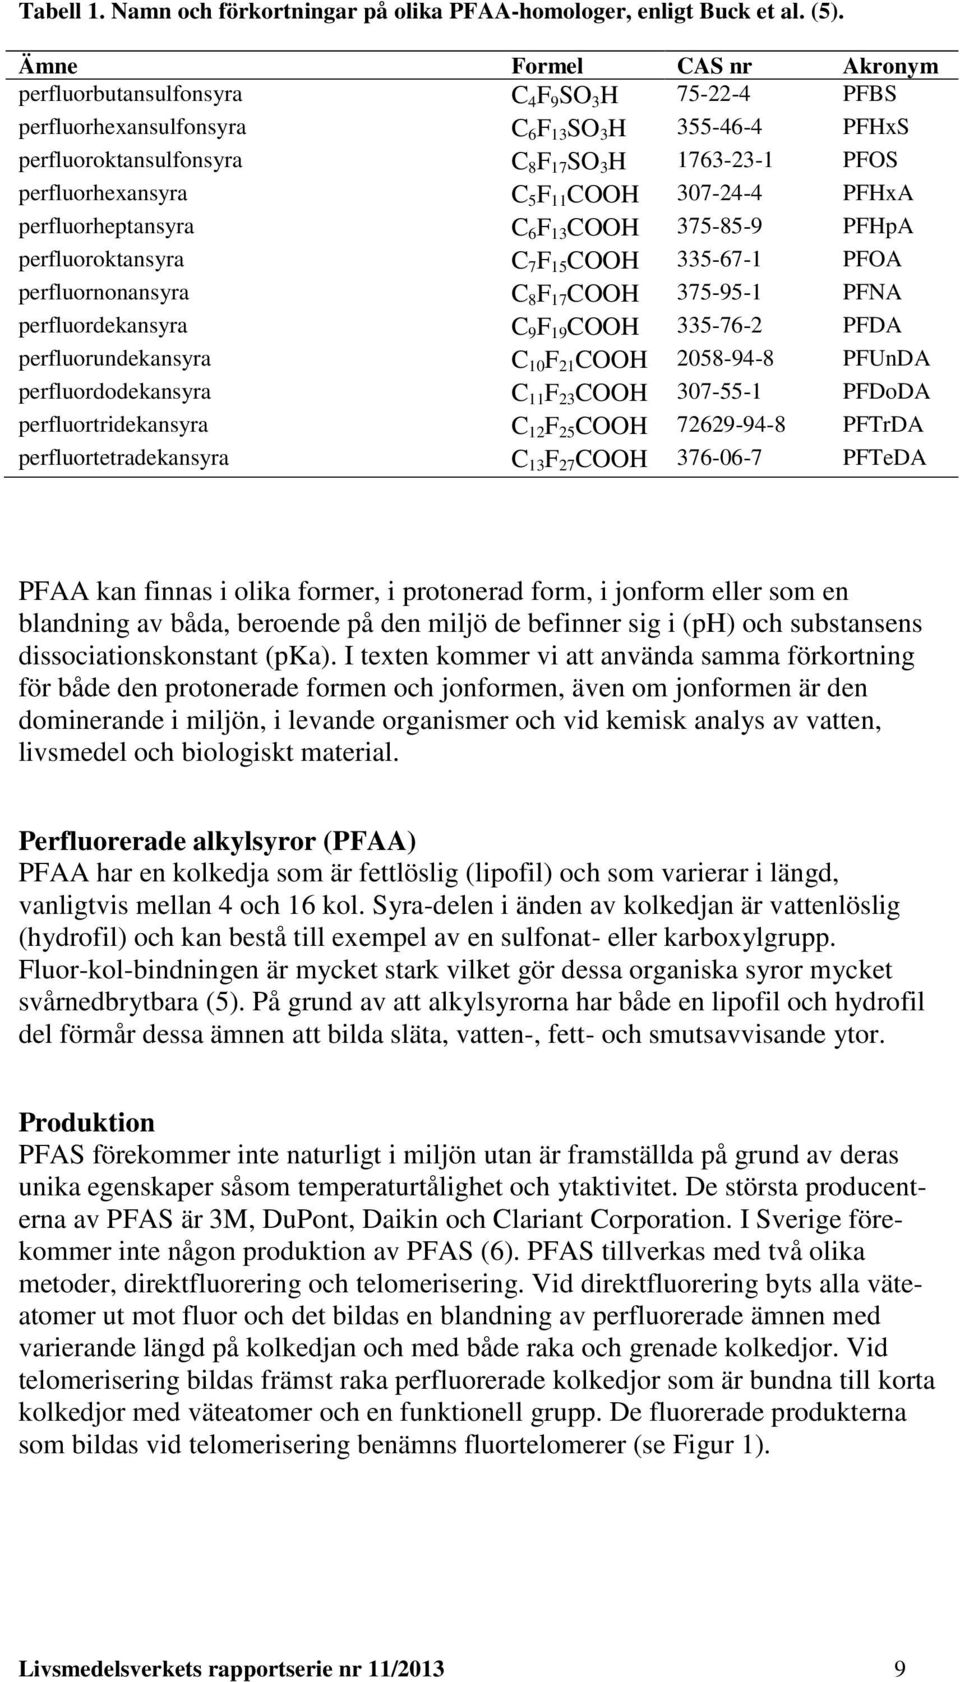 perfluorhexansyra C 5 F 11 COOH 307-24-4 PFHxA perfluorheptansyra C 6 F 13 COOH 375-85-9 PFHpA perfluoroktansyra C 7 F 15 COOH 335-67-1 PFOA perfluornonansyra C 8 F 17 COOH 375-95-1 PFNA